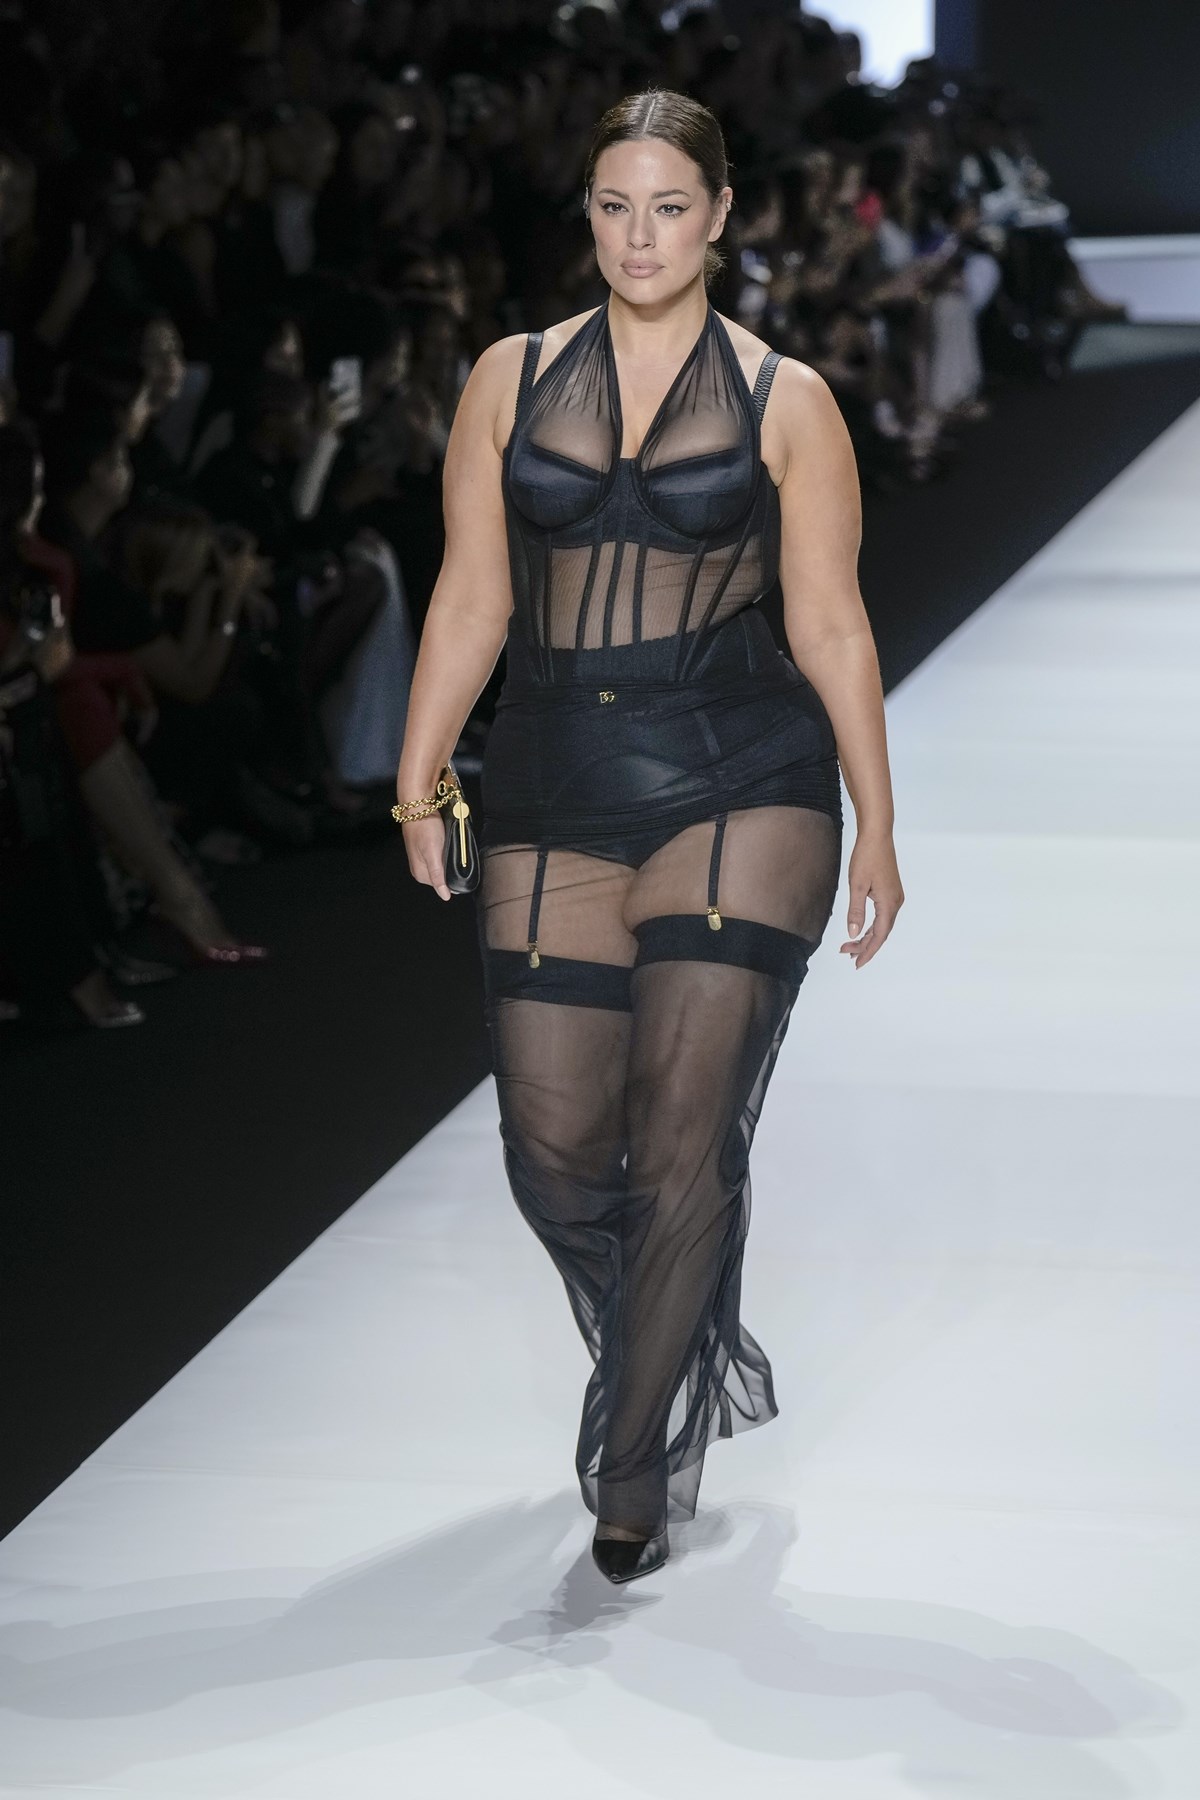 Naomi Campbell struts her stuff in sheer dress at